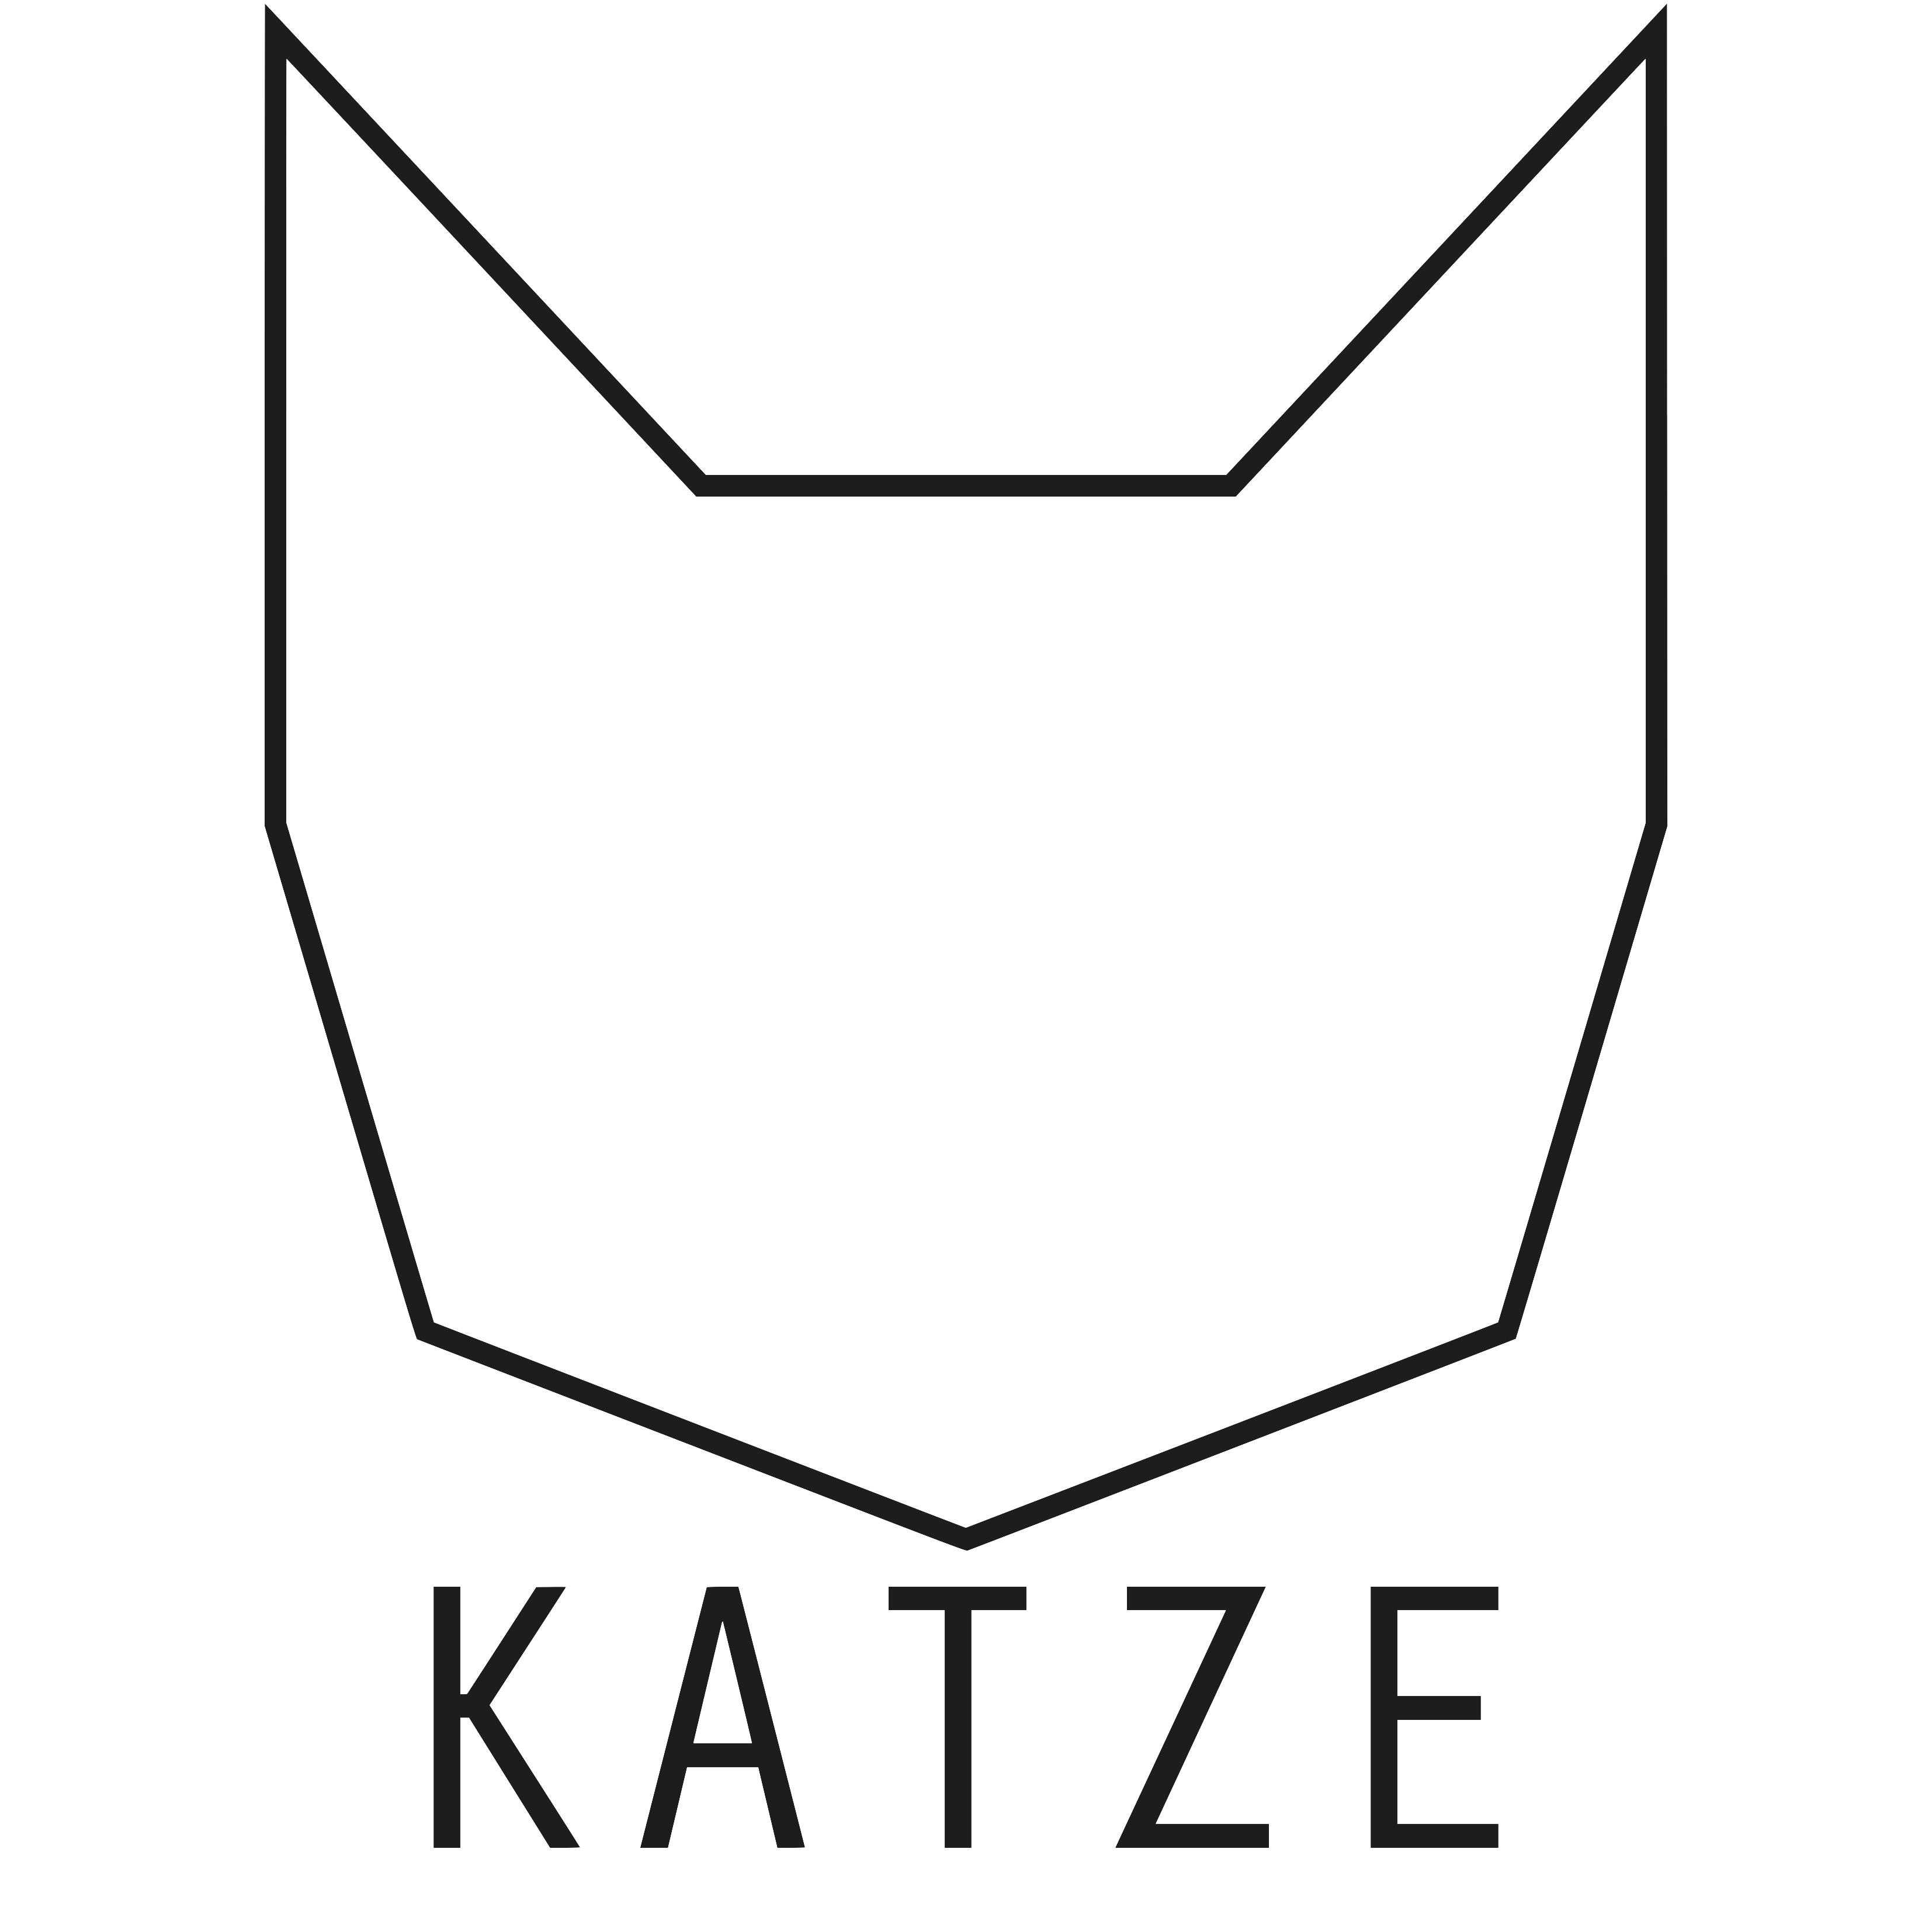 Club Katze Logo